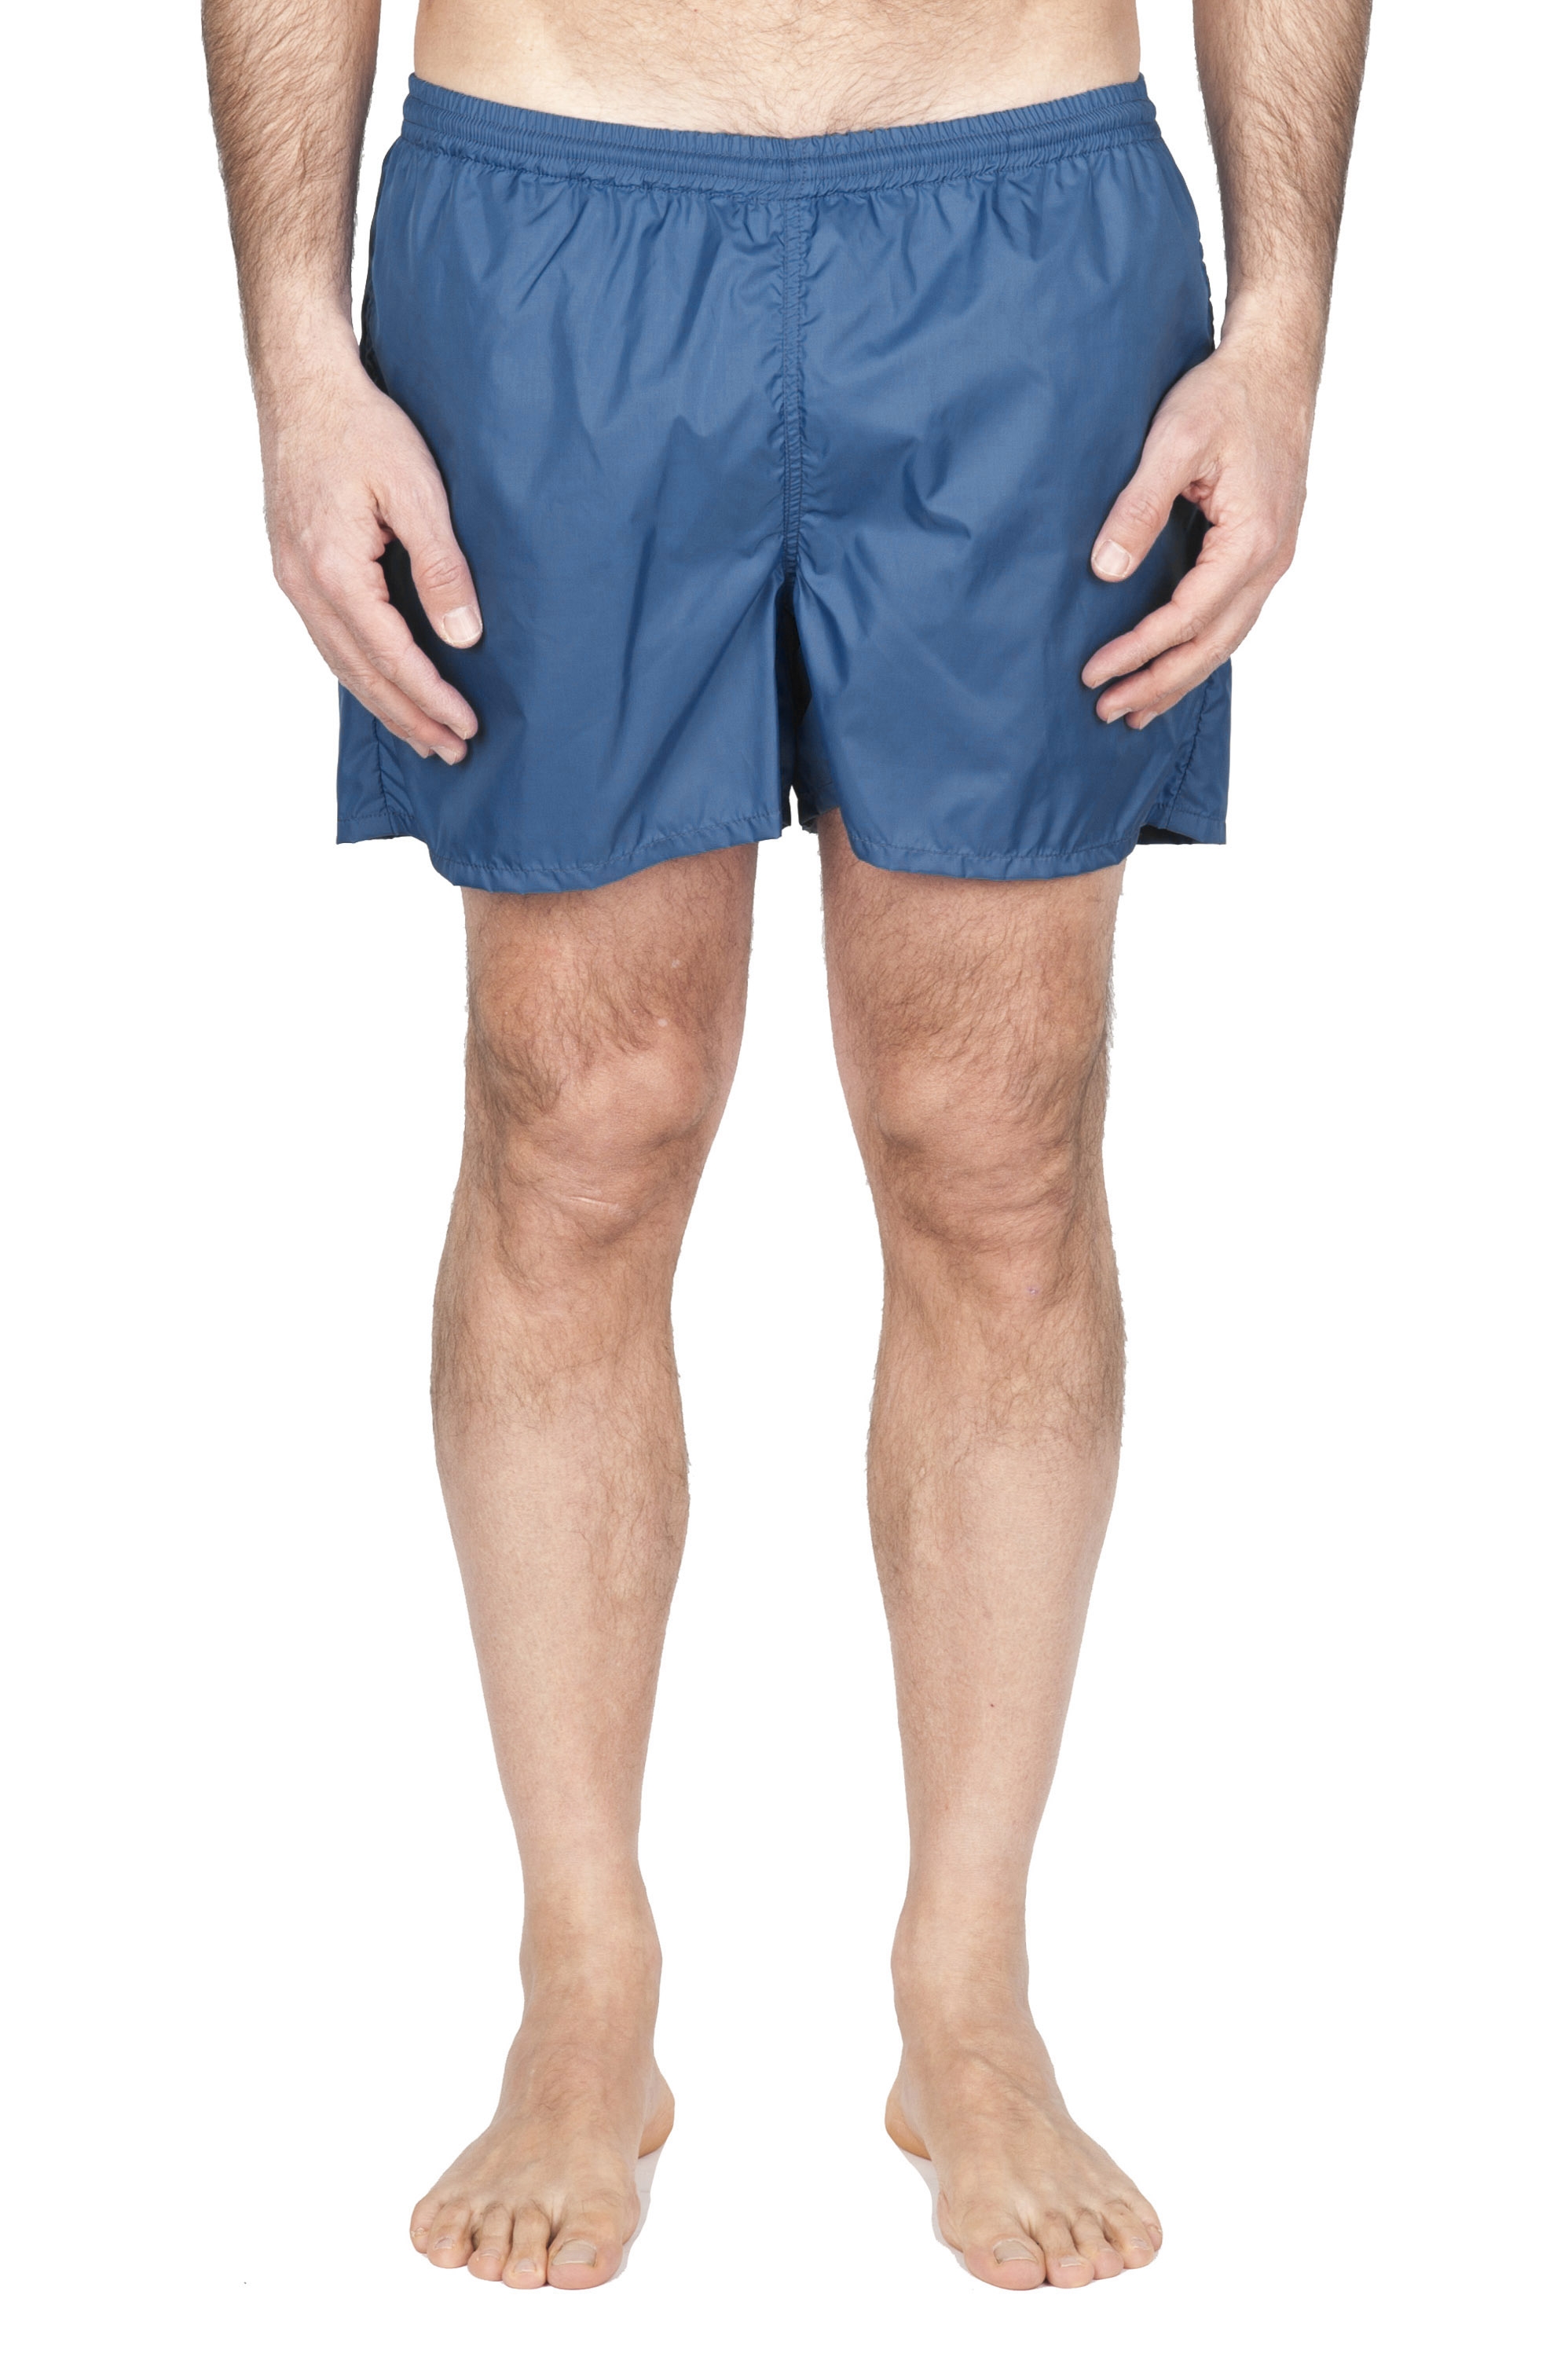 SBU 01754 Tactical swimsuit trunks in blue ultra-lightweight nylon 01